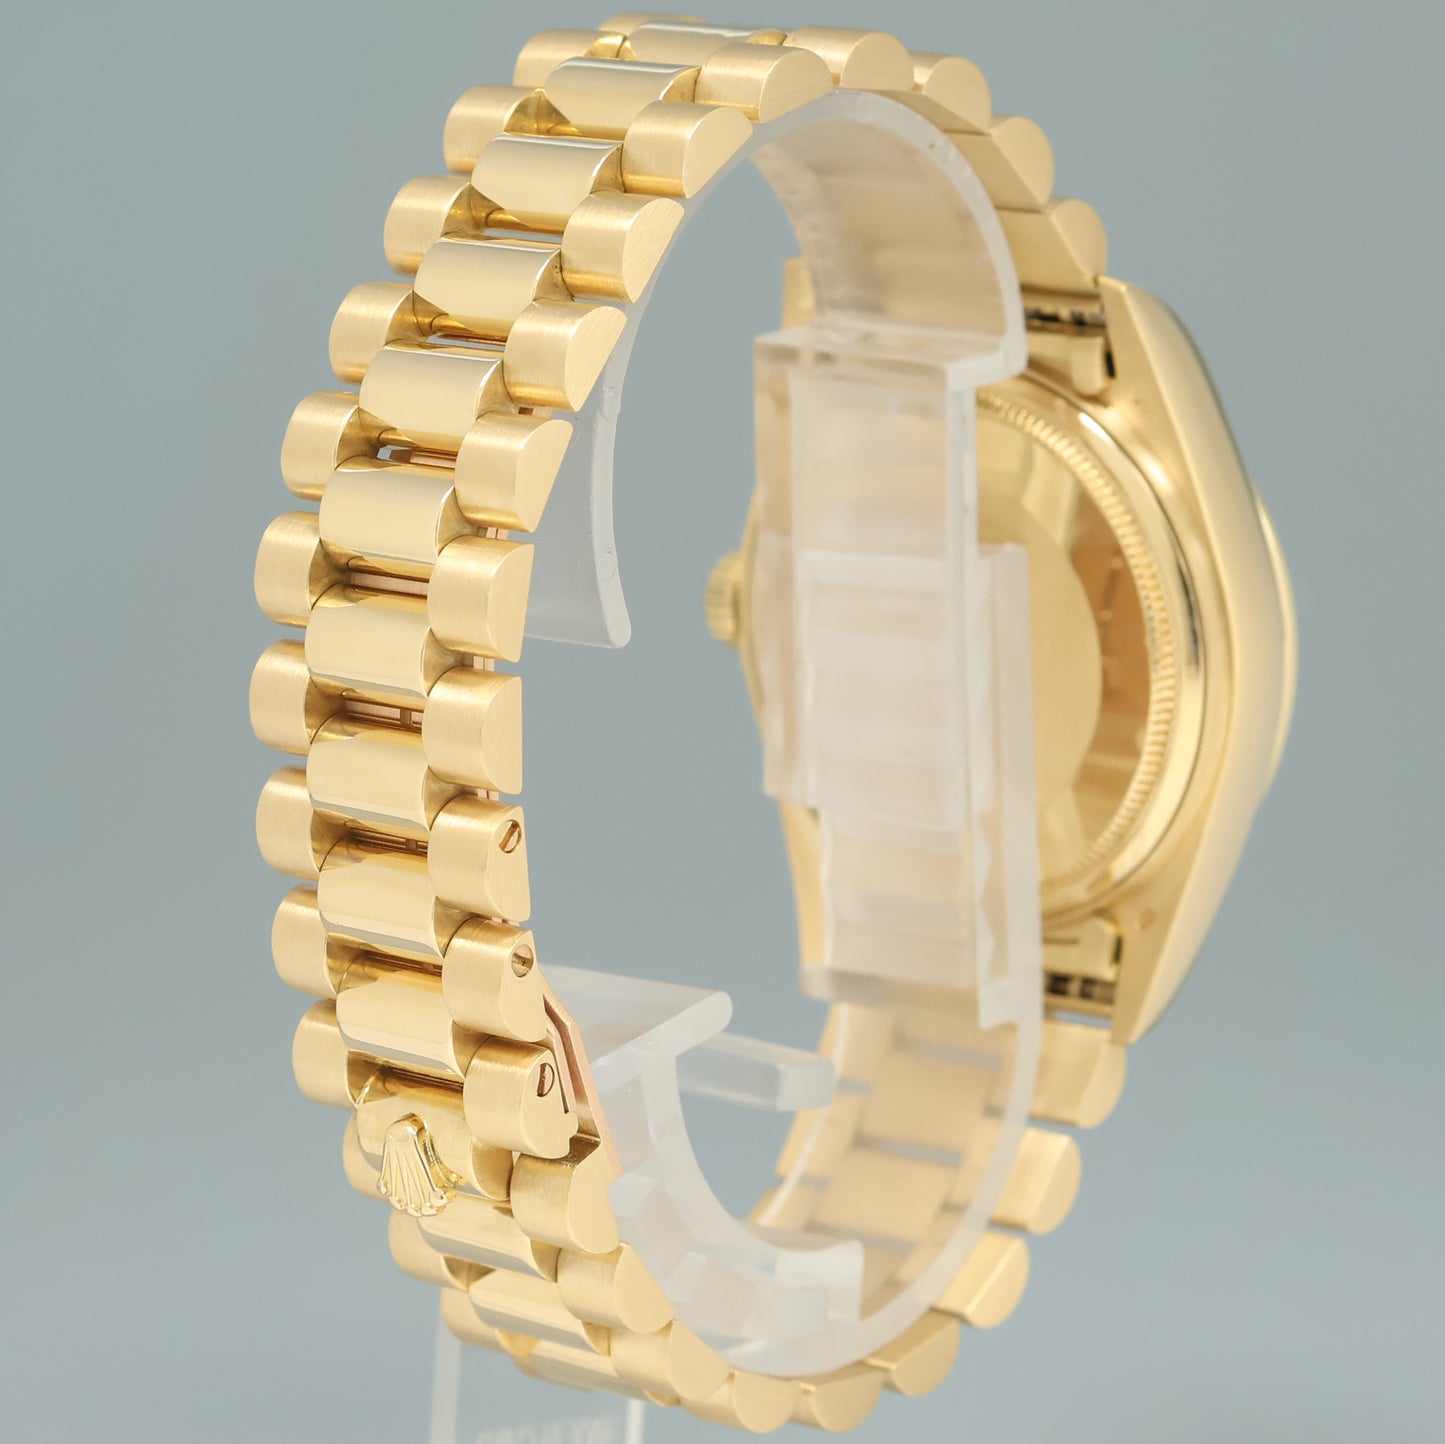 DIAMOND Rolex President Day Date 18038 Yellow Gold Champagne 36mm Quickset Watch